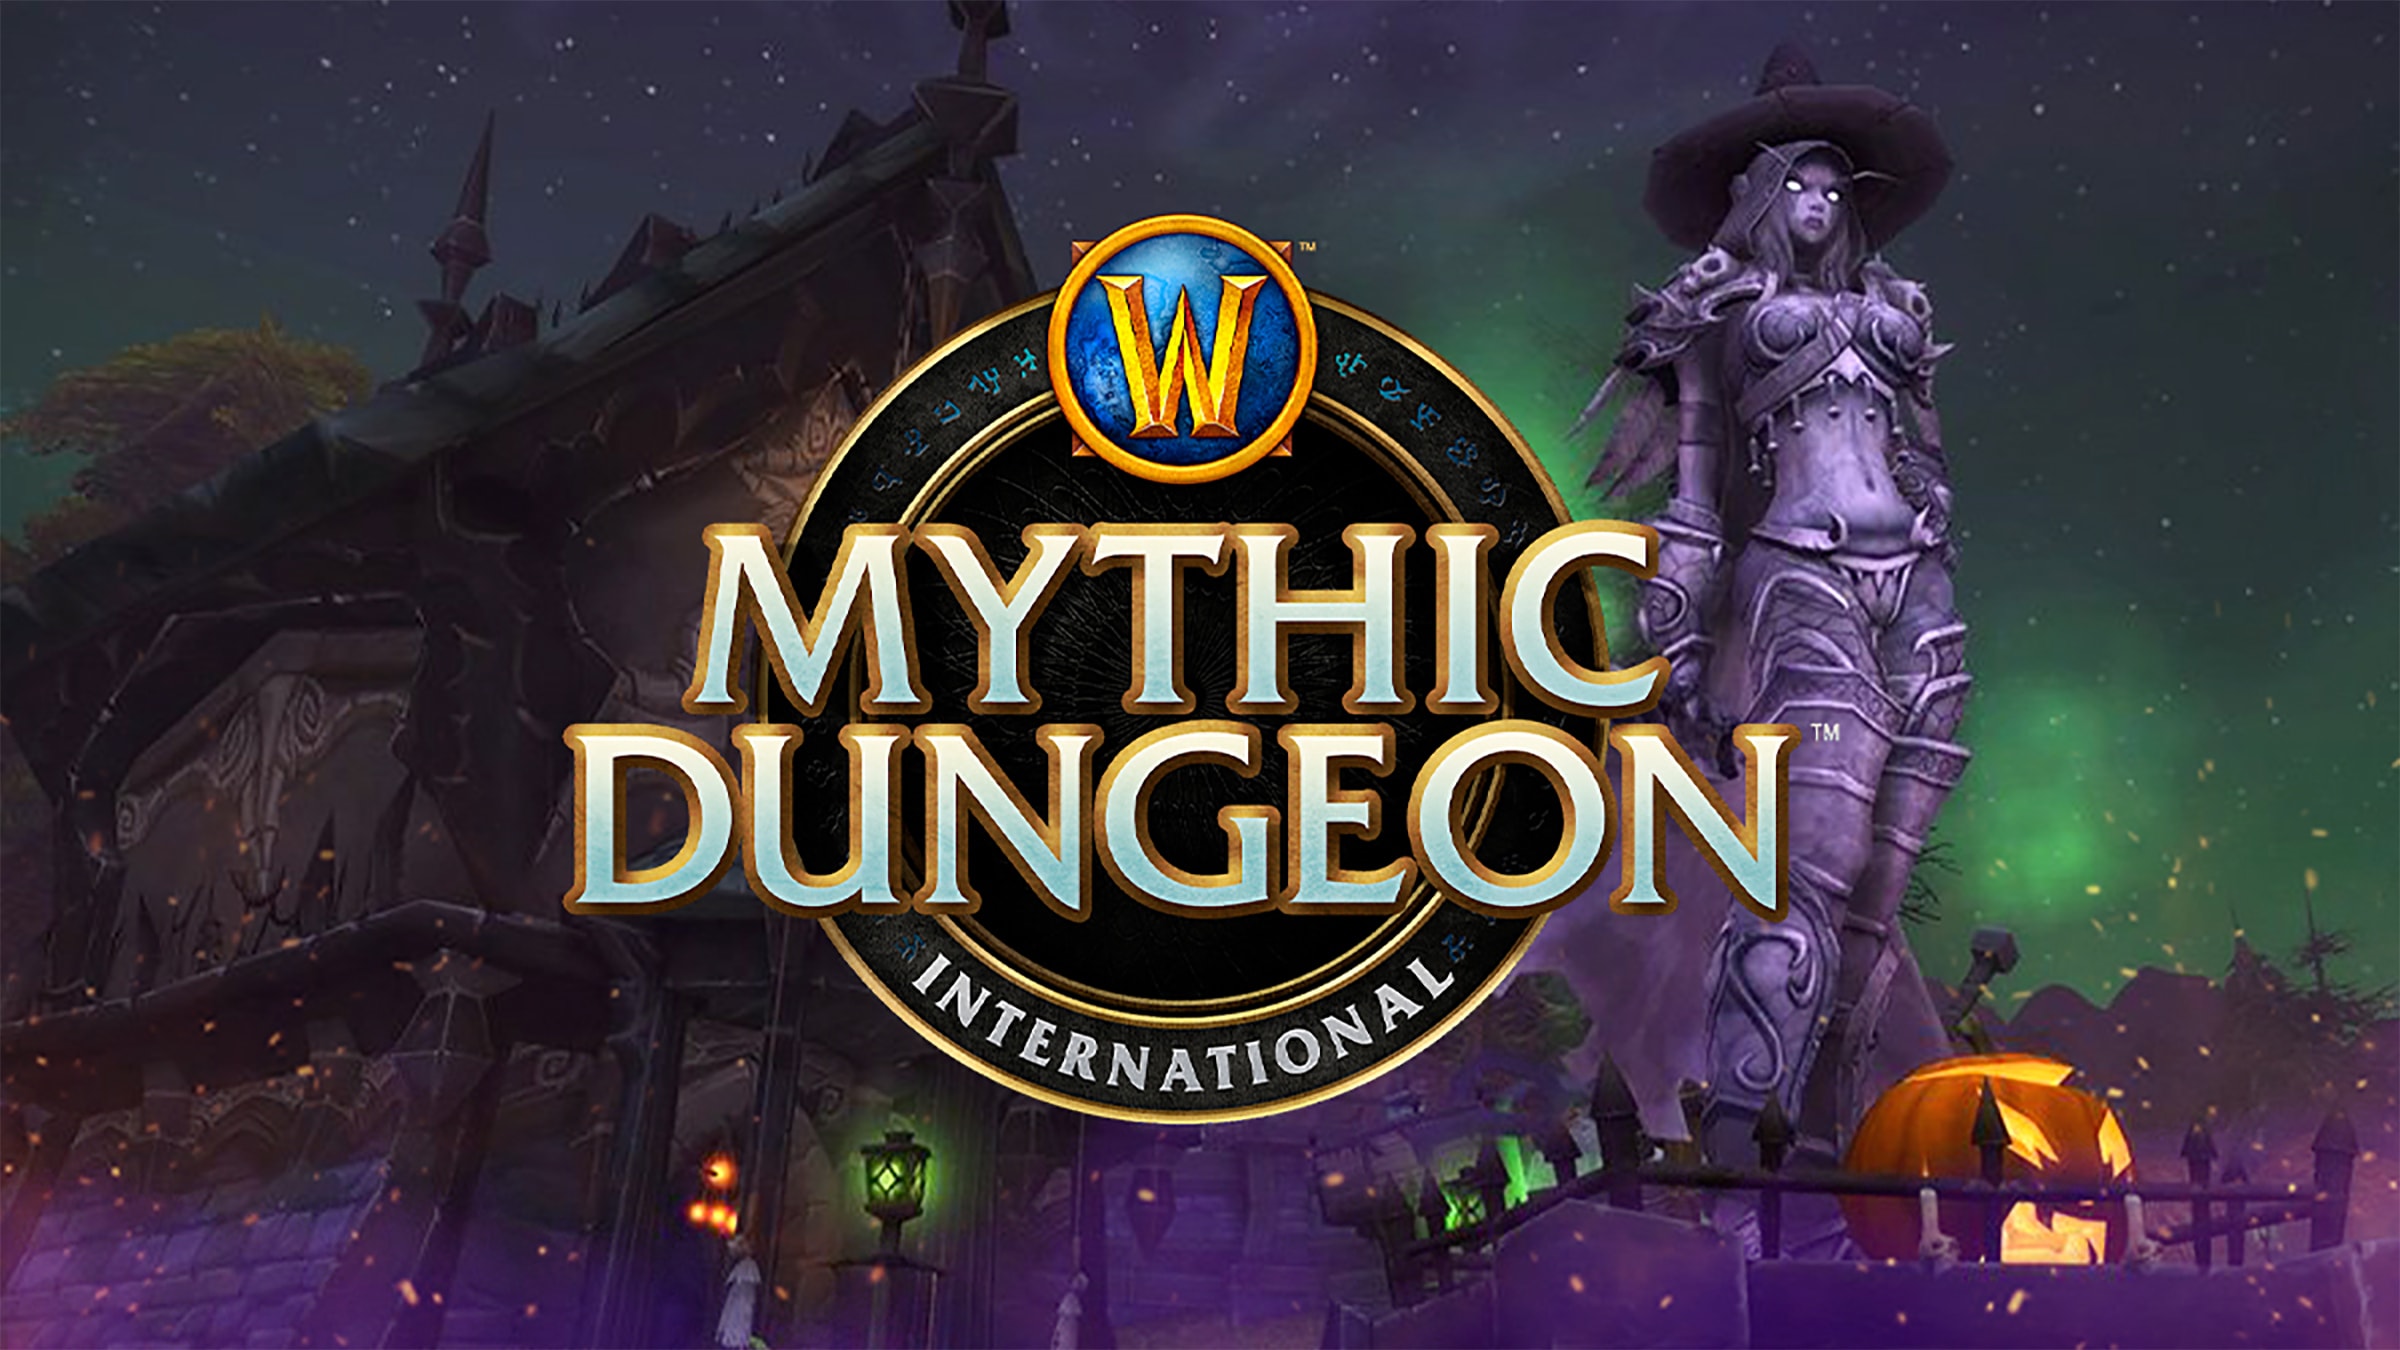 ¡Llega la final global de 2021 del Mythic Dungeon International!